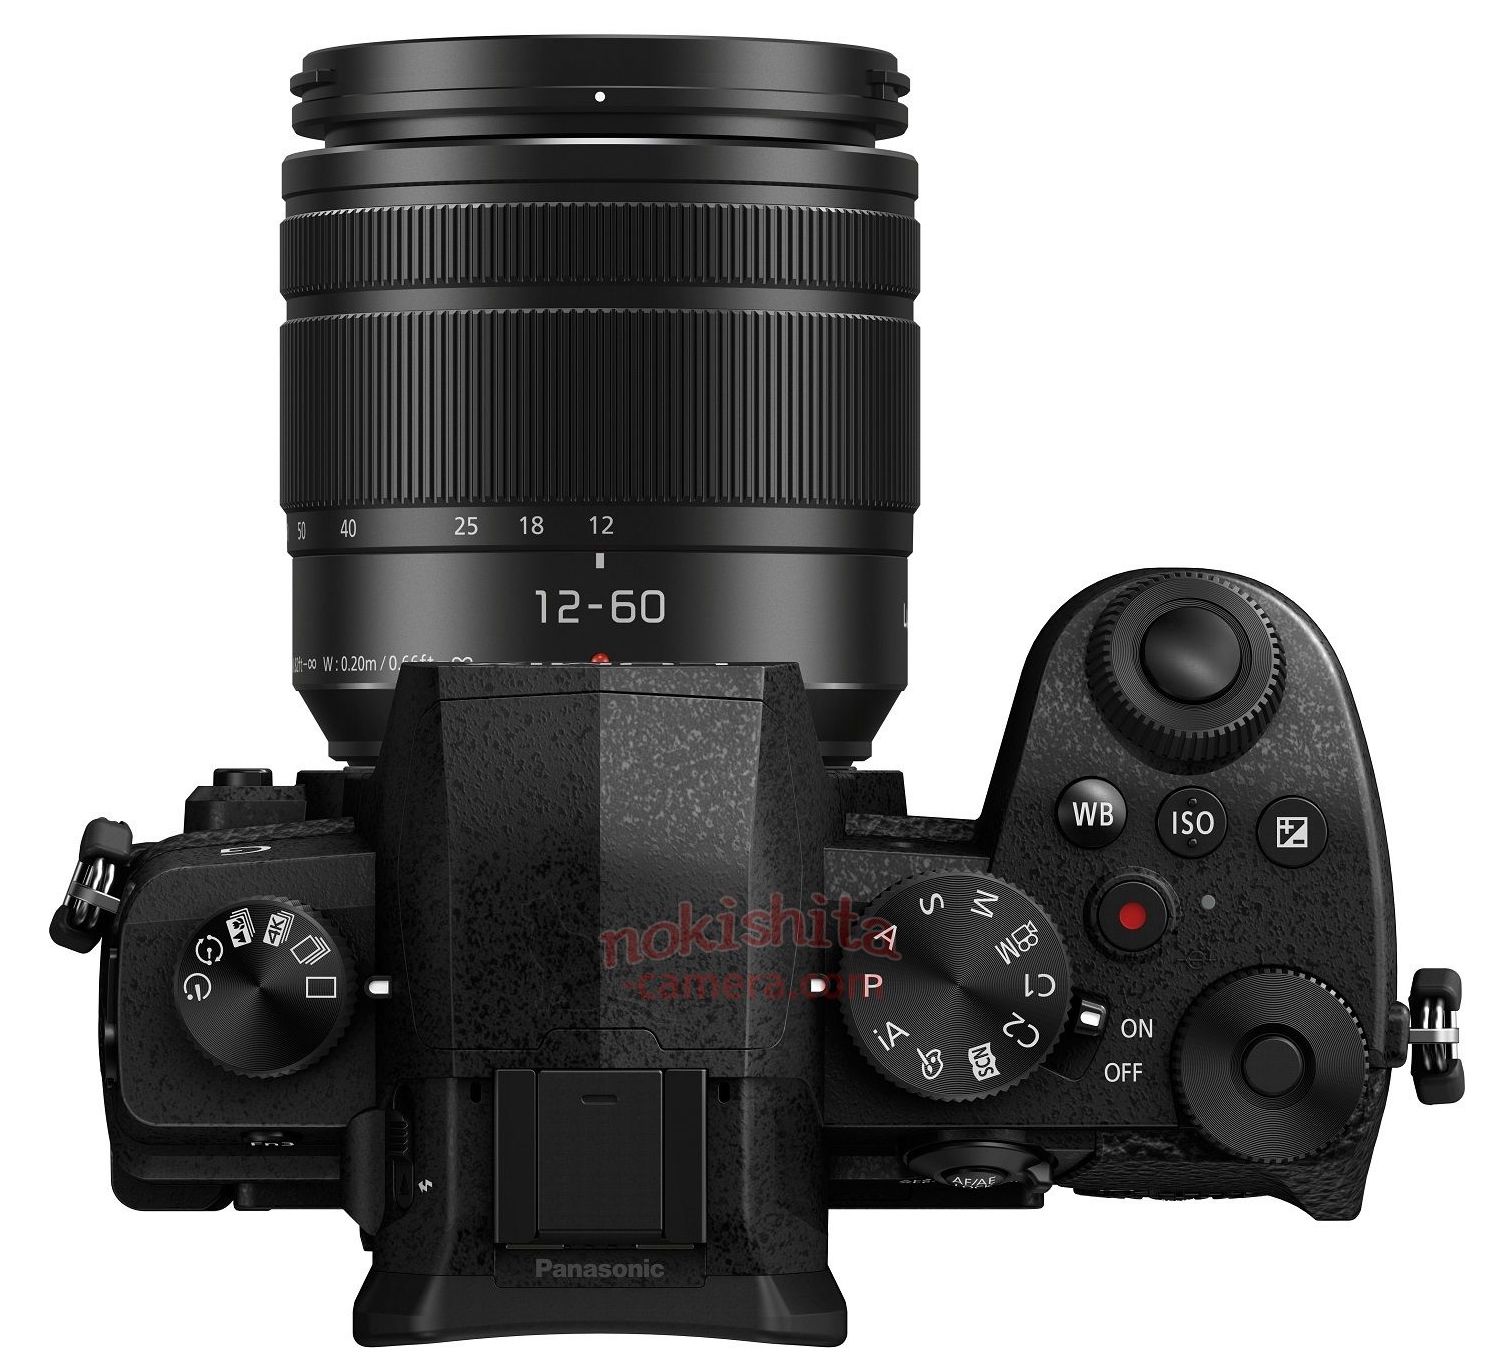 Panasonic Lumix / G95 / G99 camera specifications online - Photo Rumors